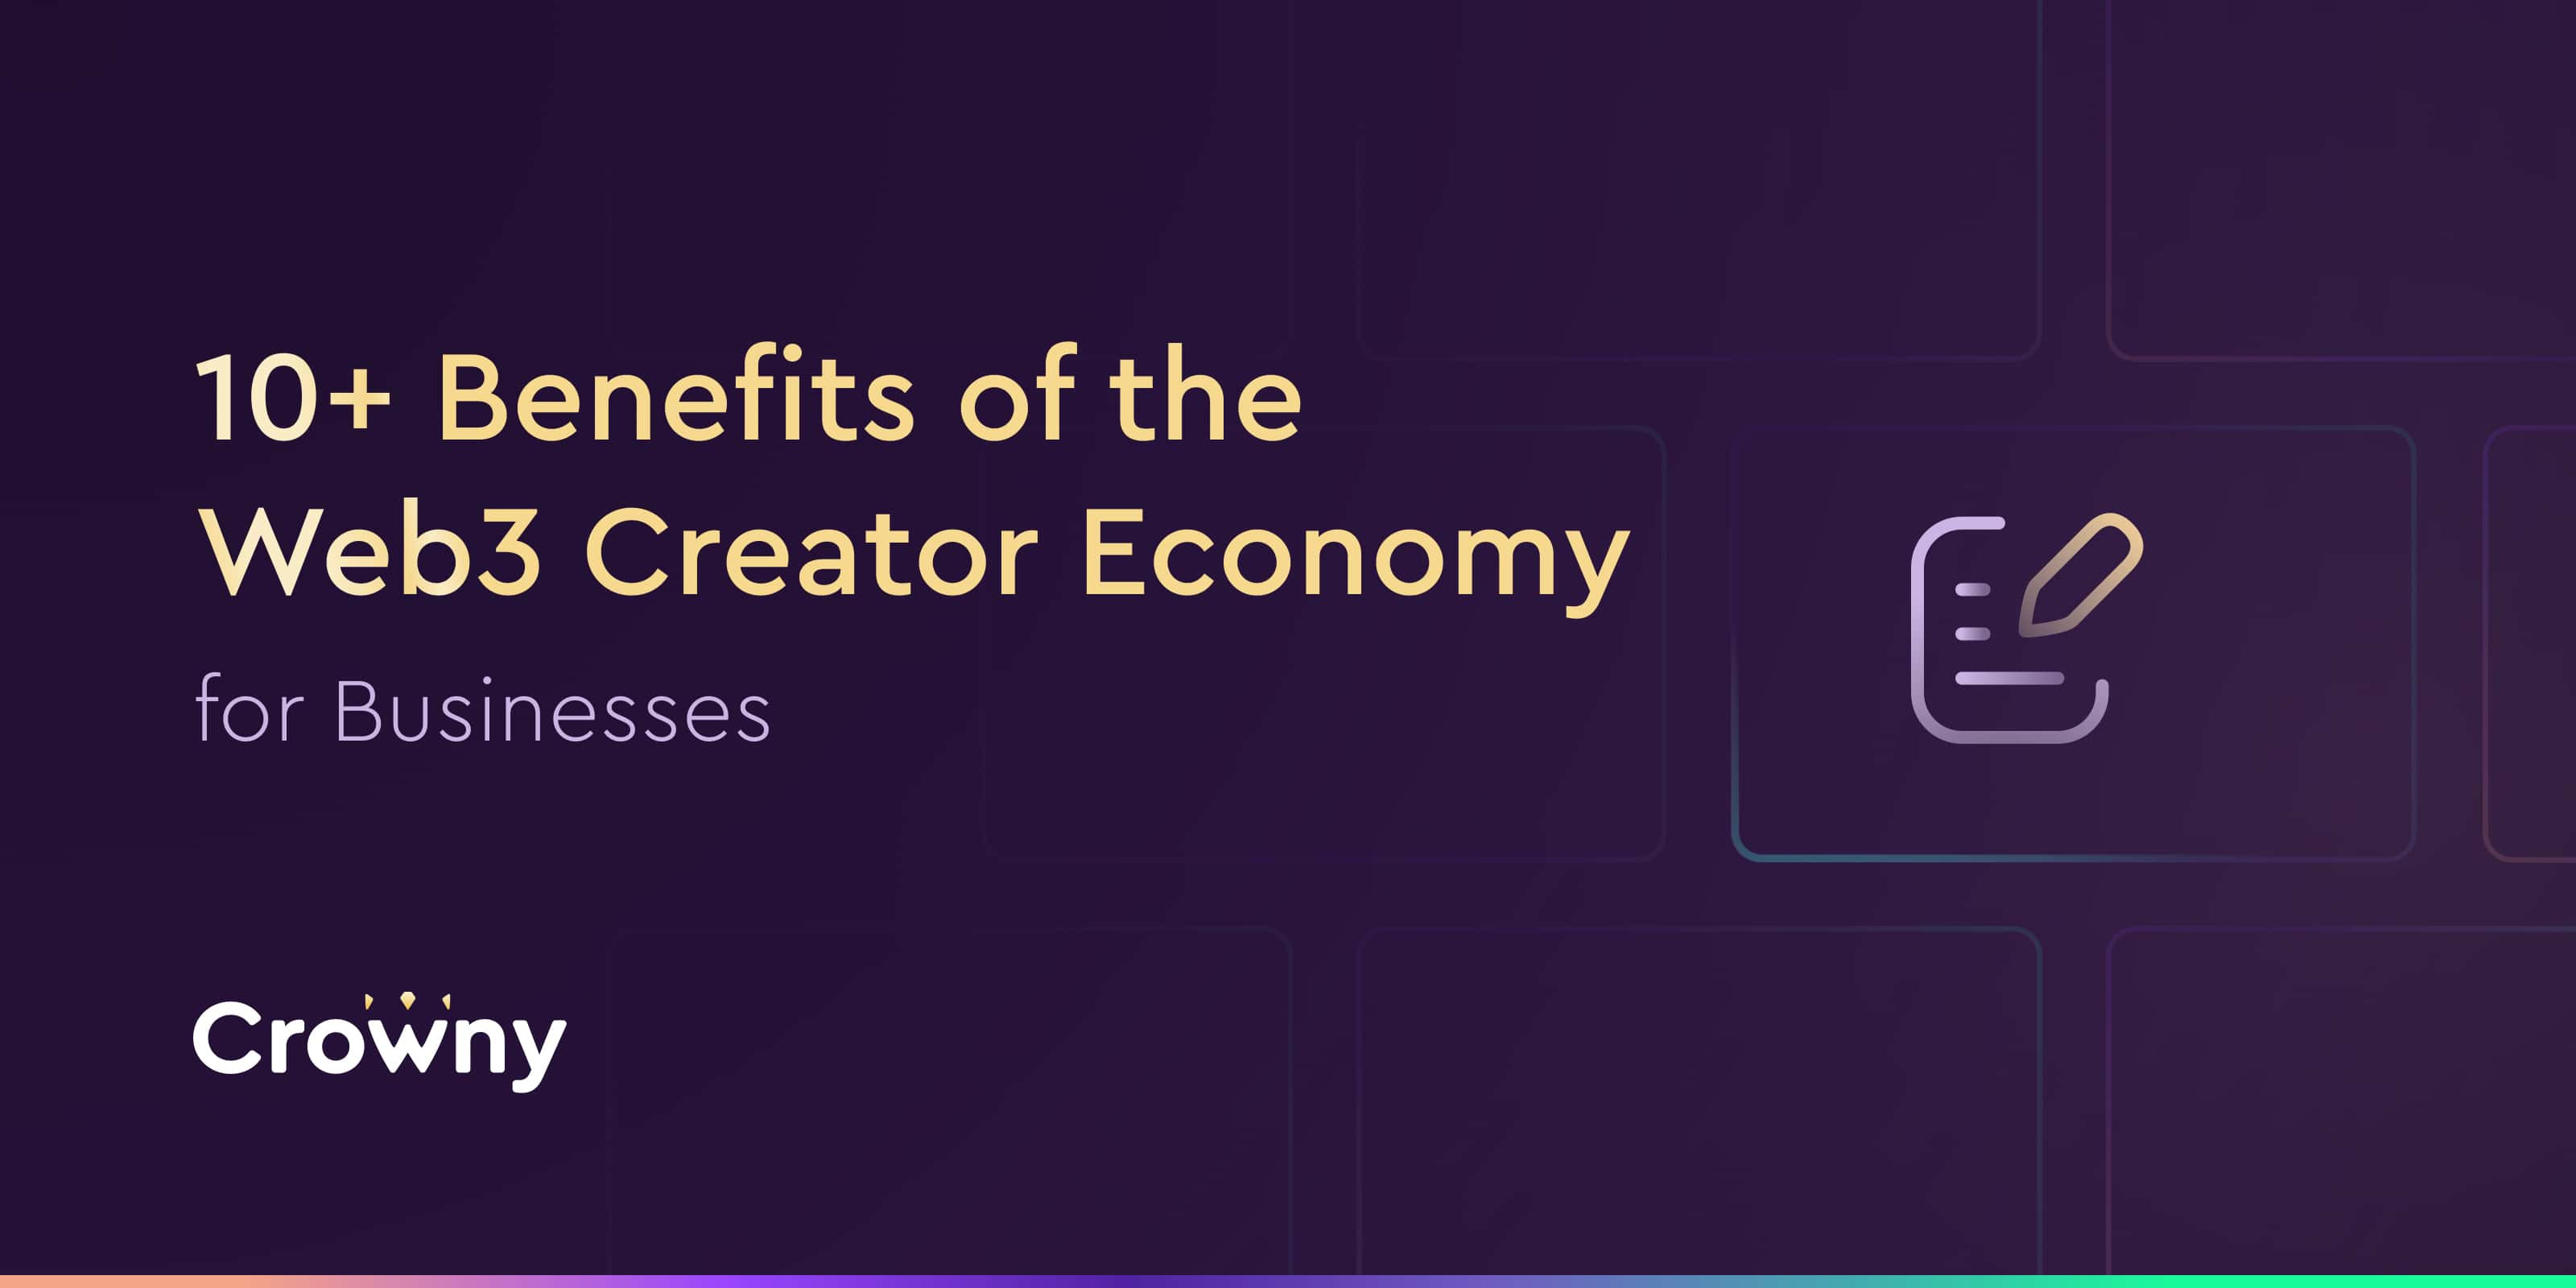 Web3 creator economy - 10+ benefits for businesses